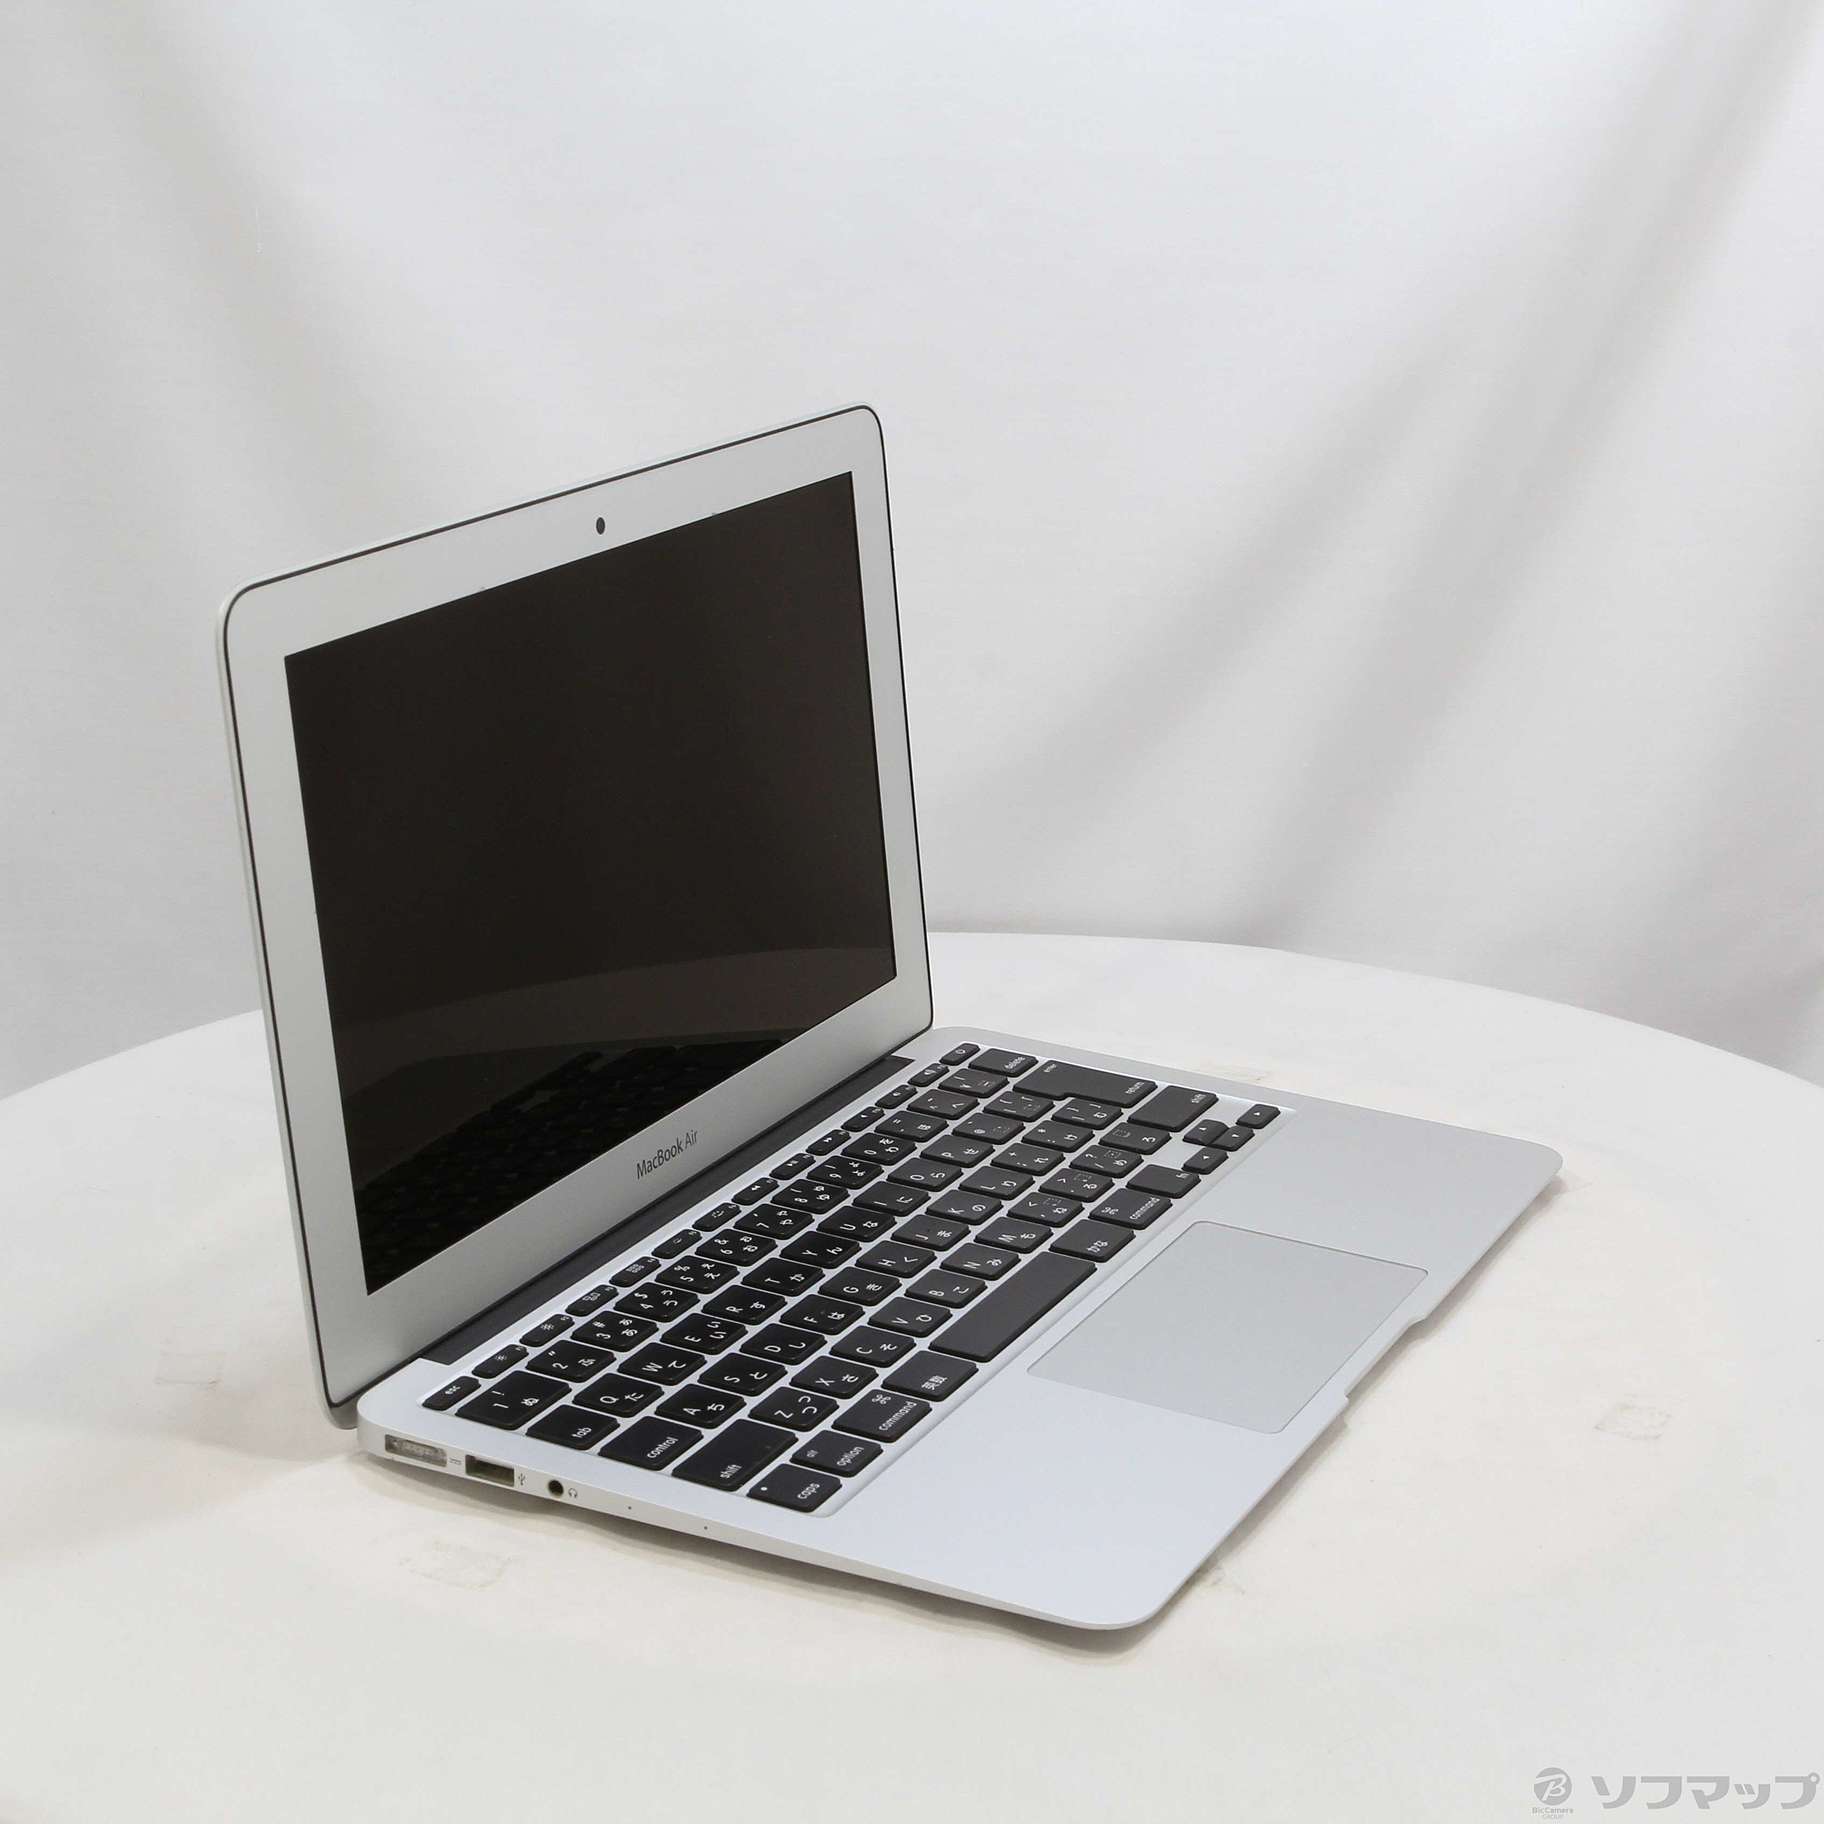 Macbook Air 11-inch, Mid 2013